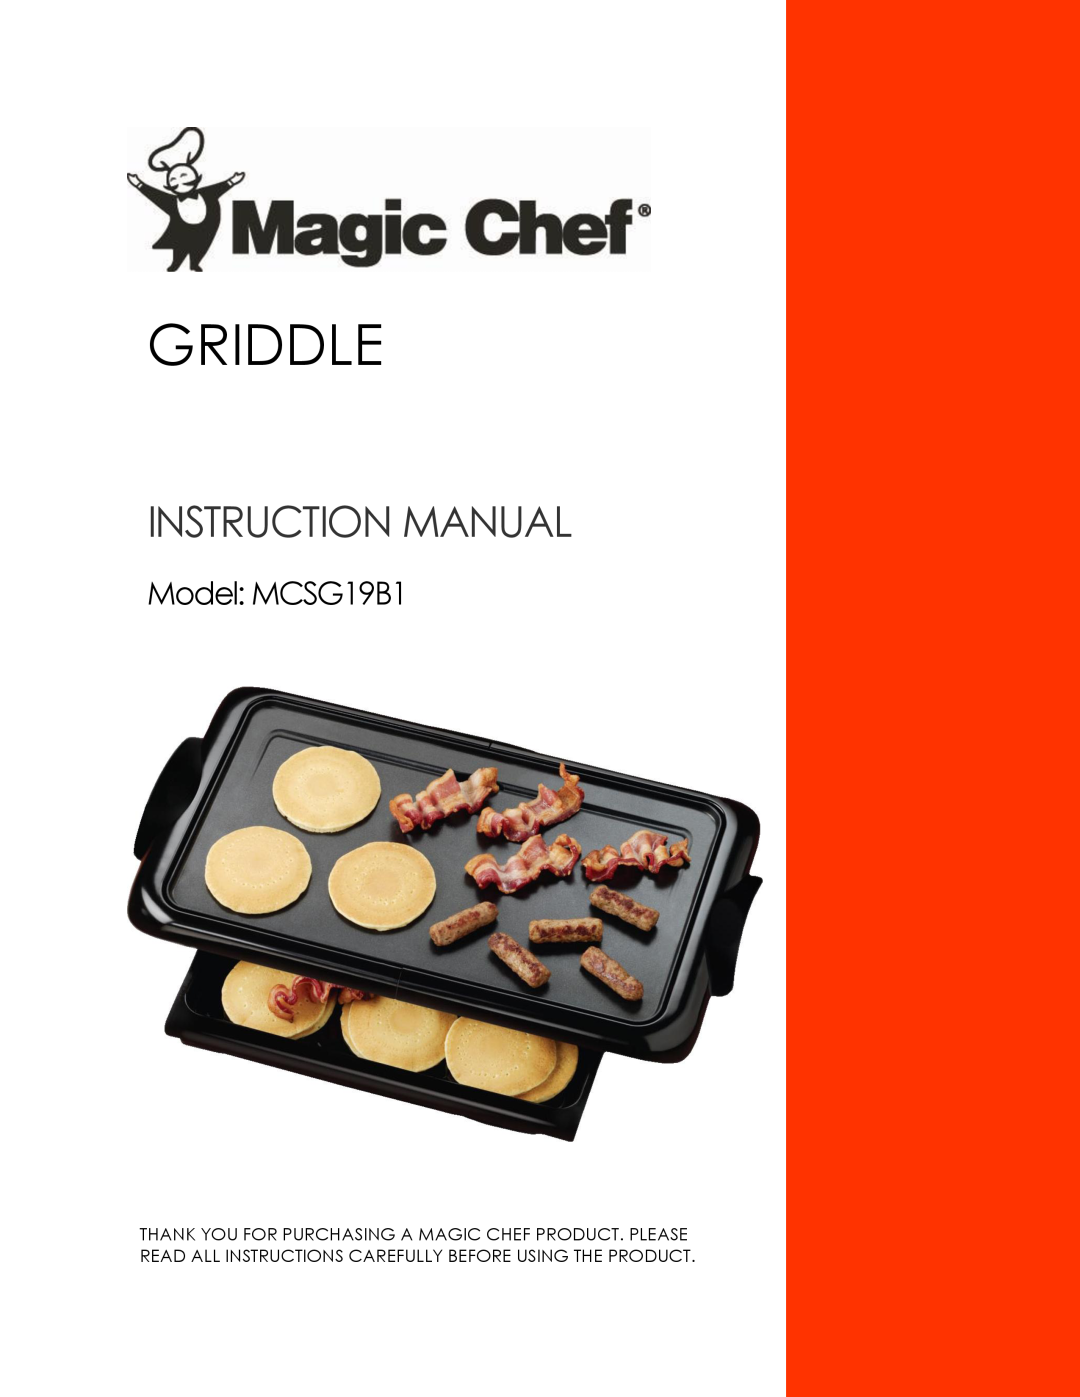 Magic Chef instruction manual Griddle, Model MCSG19B1 